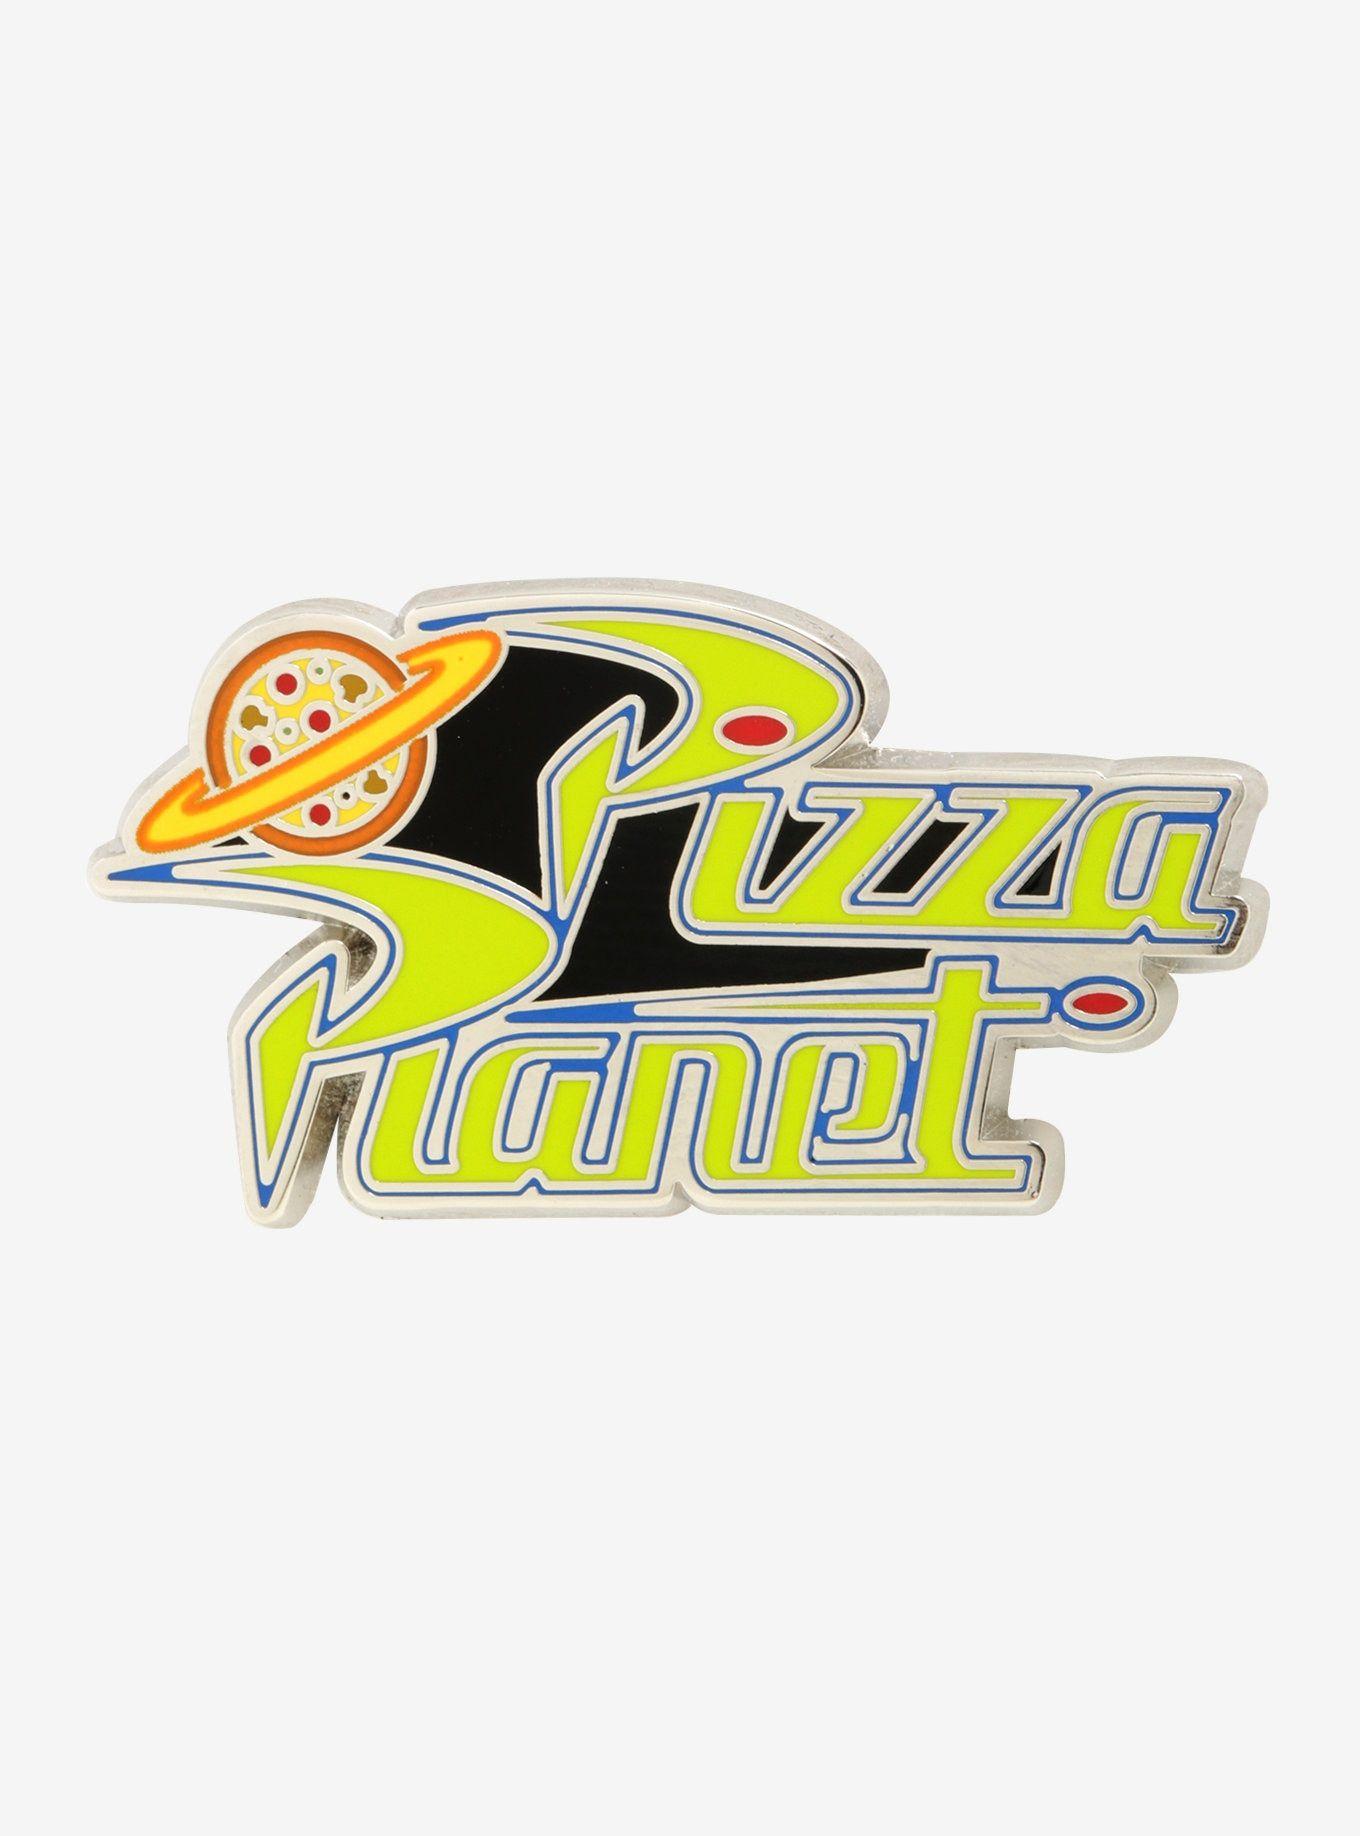 Disney Pixar Toy Story Logo - Disney Pixar Toy Story Pizza Planet Logo Enamel Pin